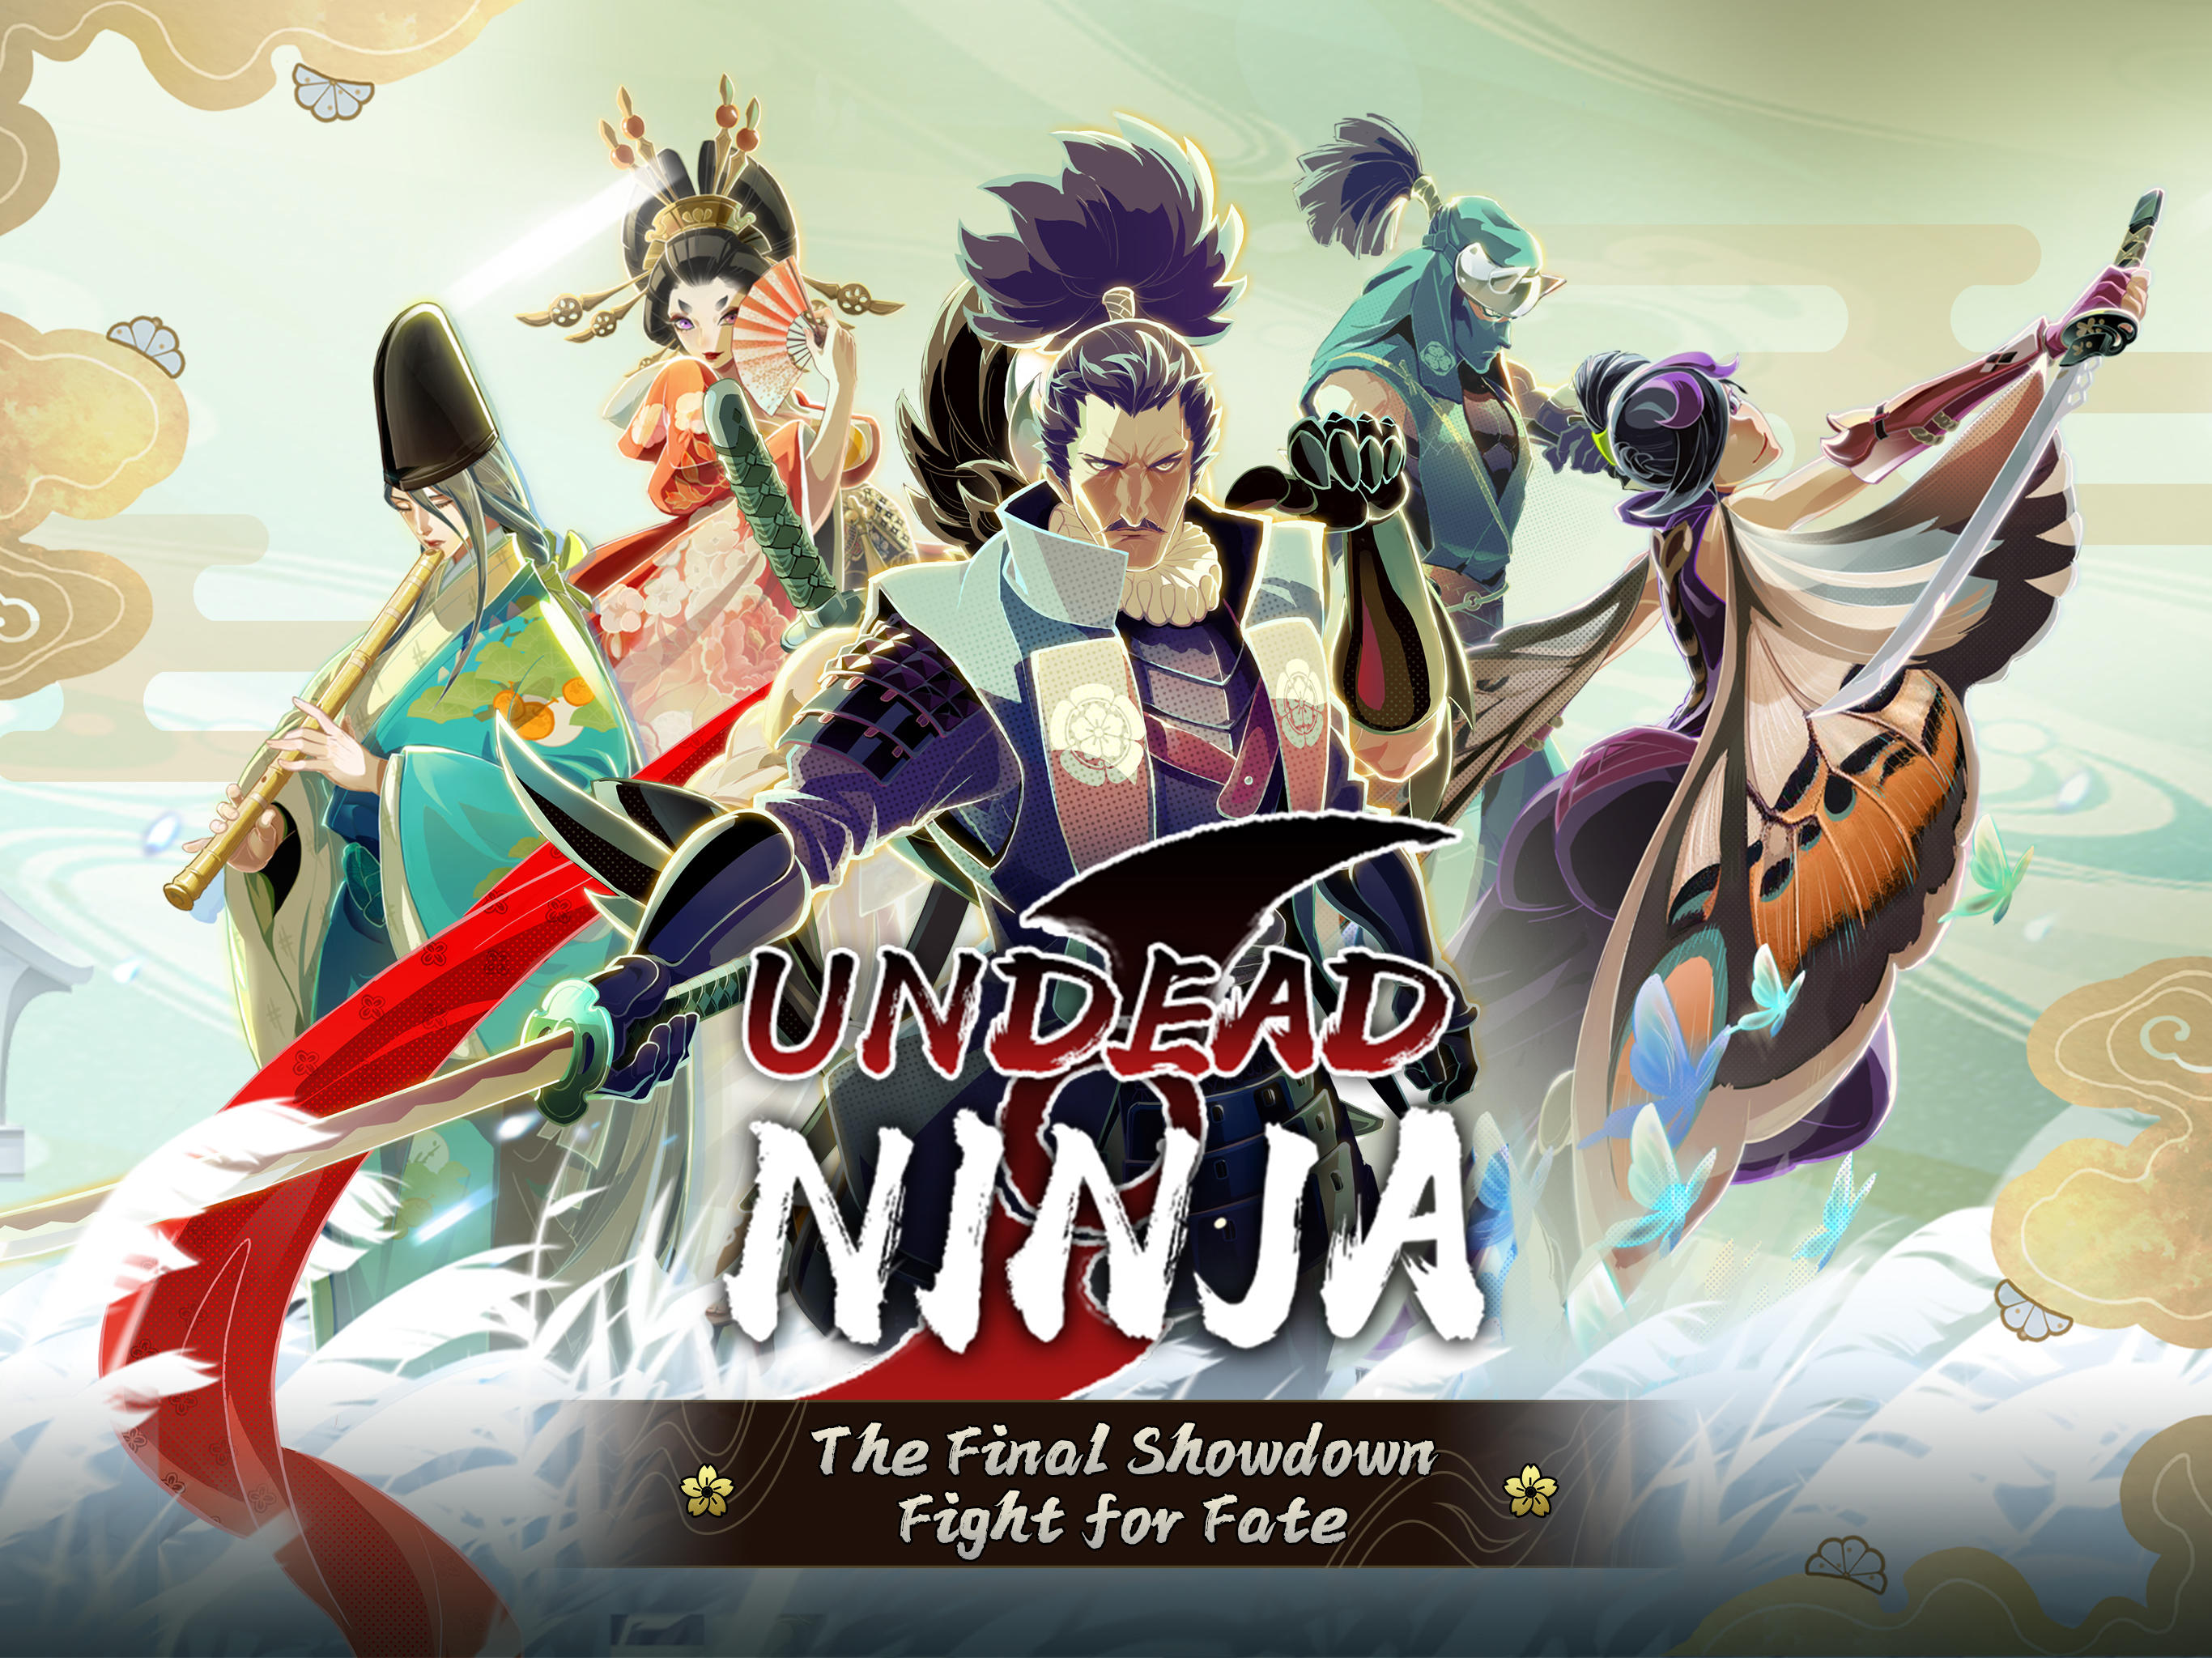 Screenshot of Undead Ninja